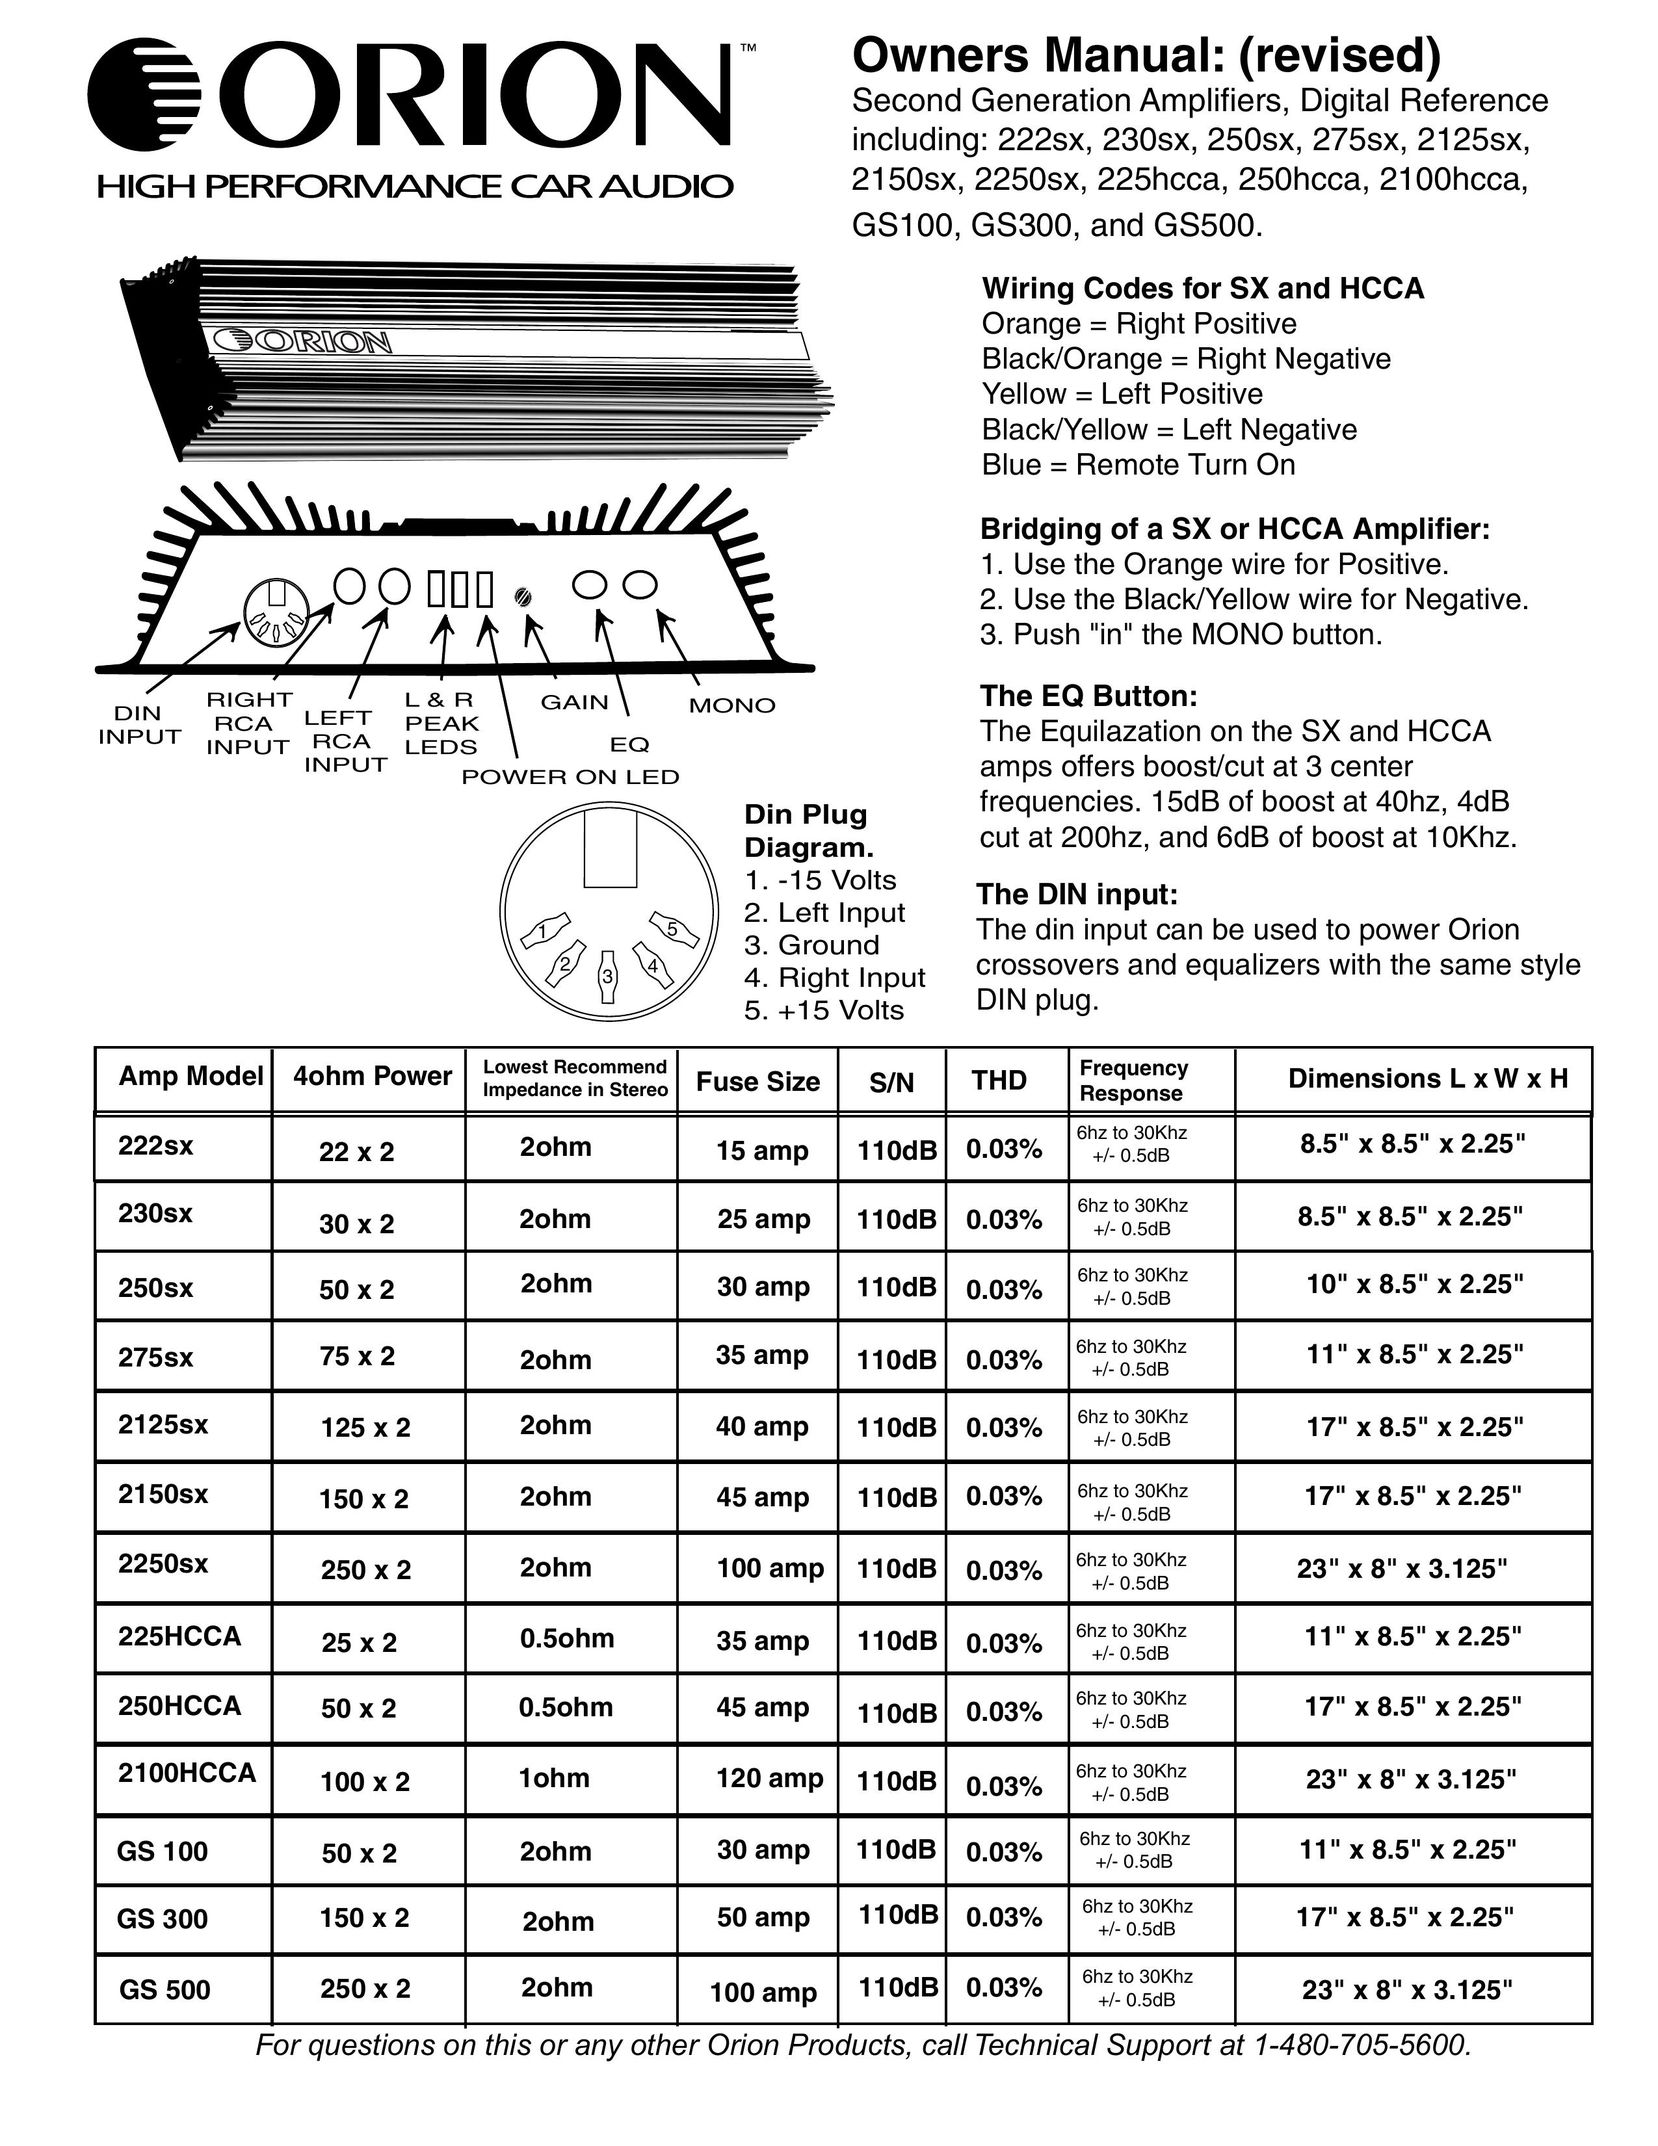 Orion Car Audio GS 500 Car Amplifier User Manual